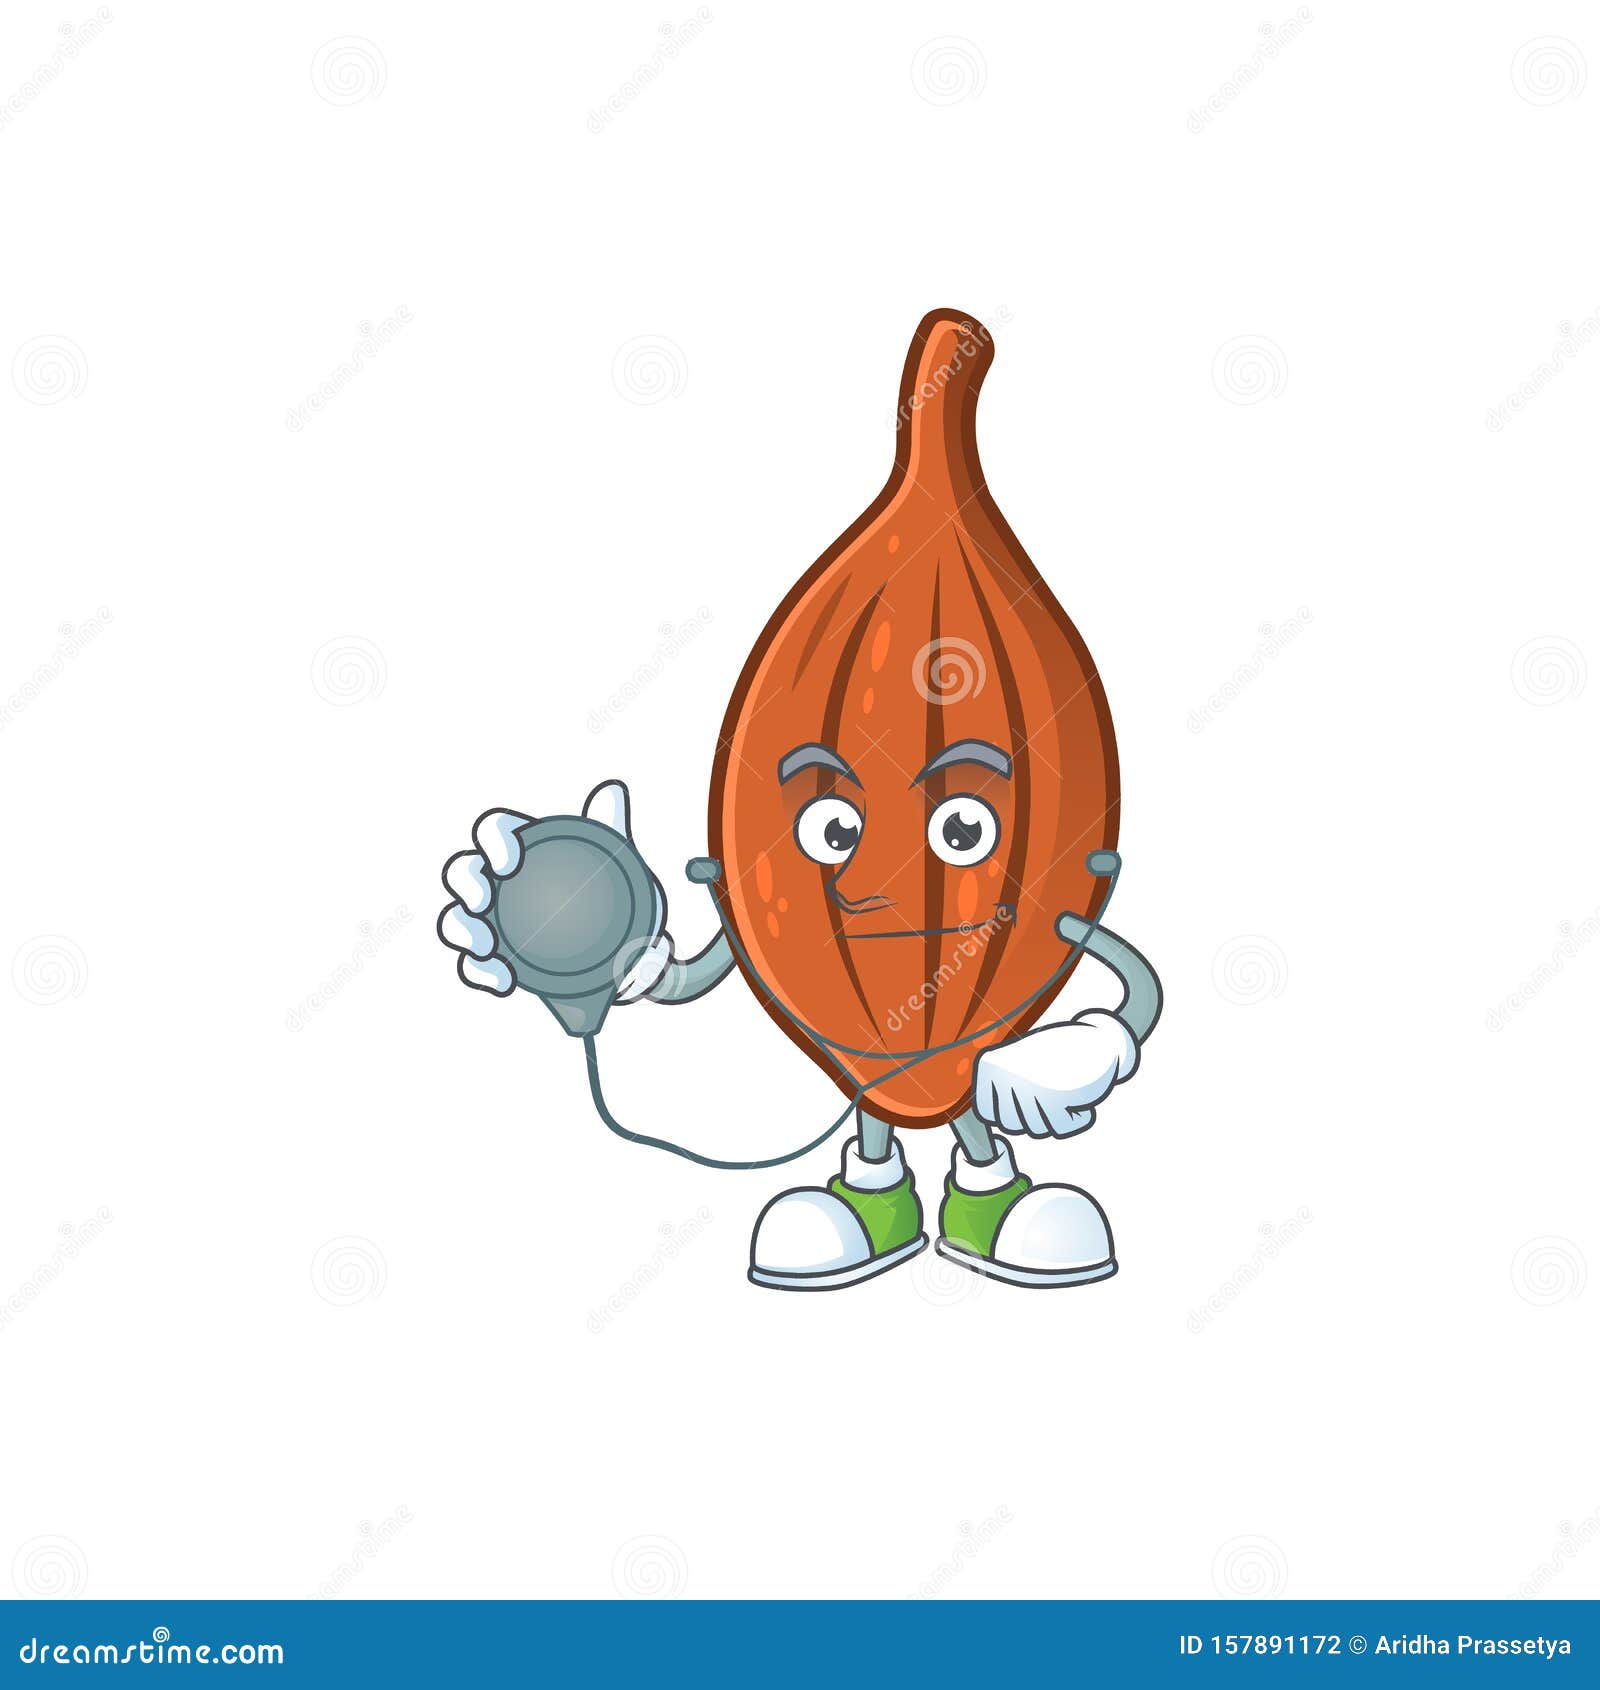 https://thumbs.dreamstime.com/z/doctor-seeds-choco-cartoon-symbol-mascot-doctor-seeds-choco-cartoon-symbol-mascot-vector-illustration-157891172.jpg